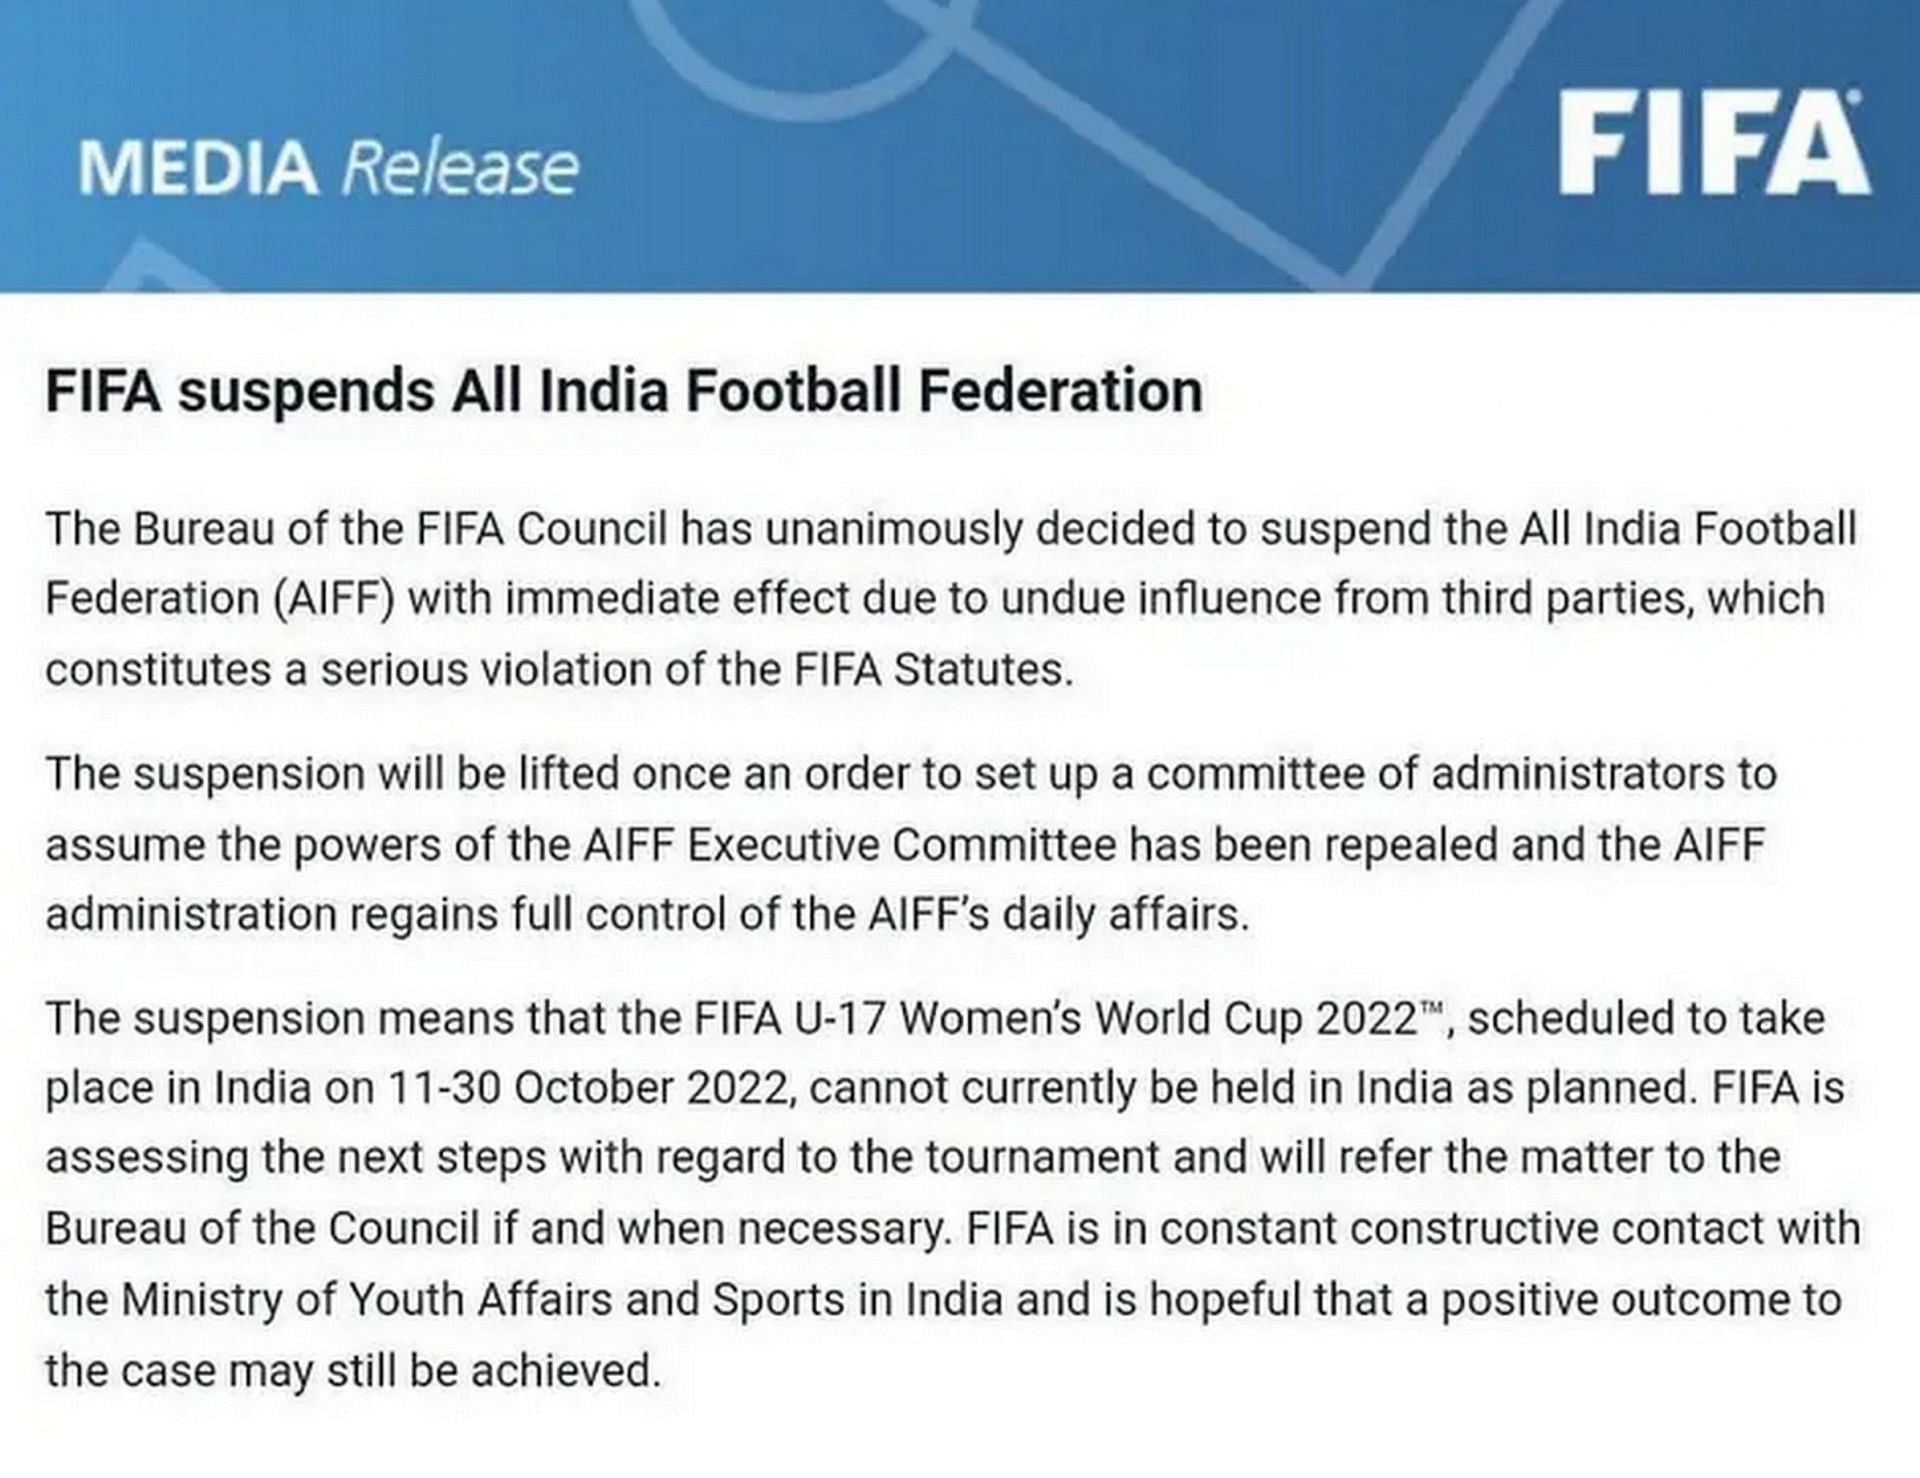 The FIFA media release